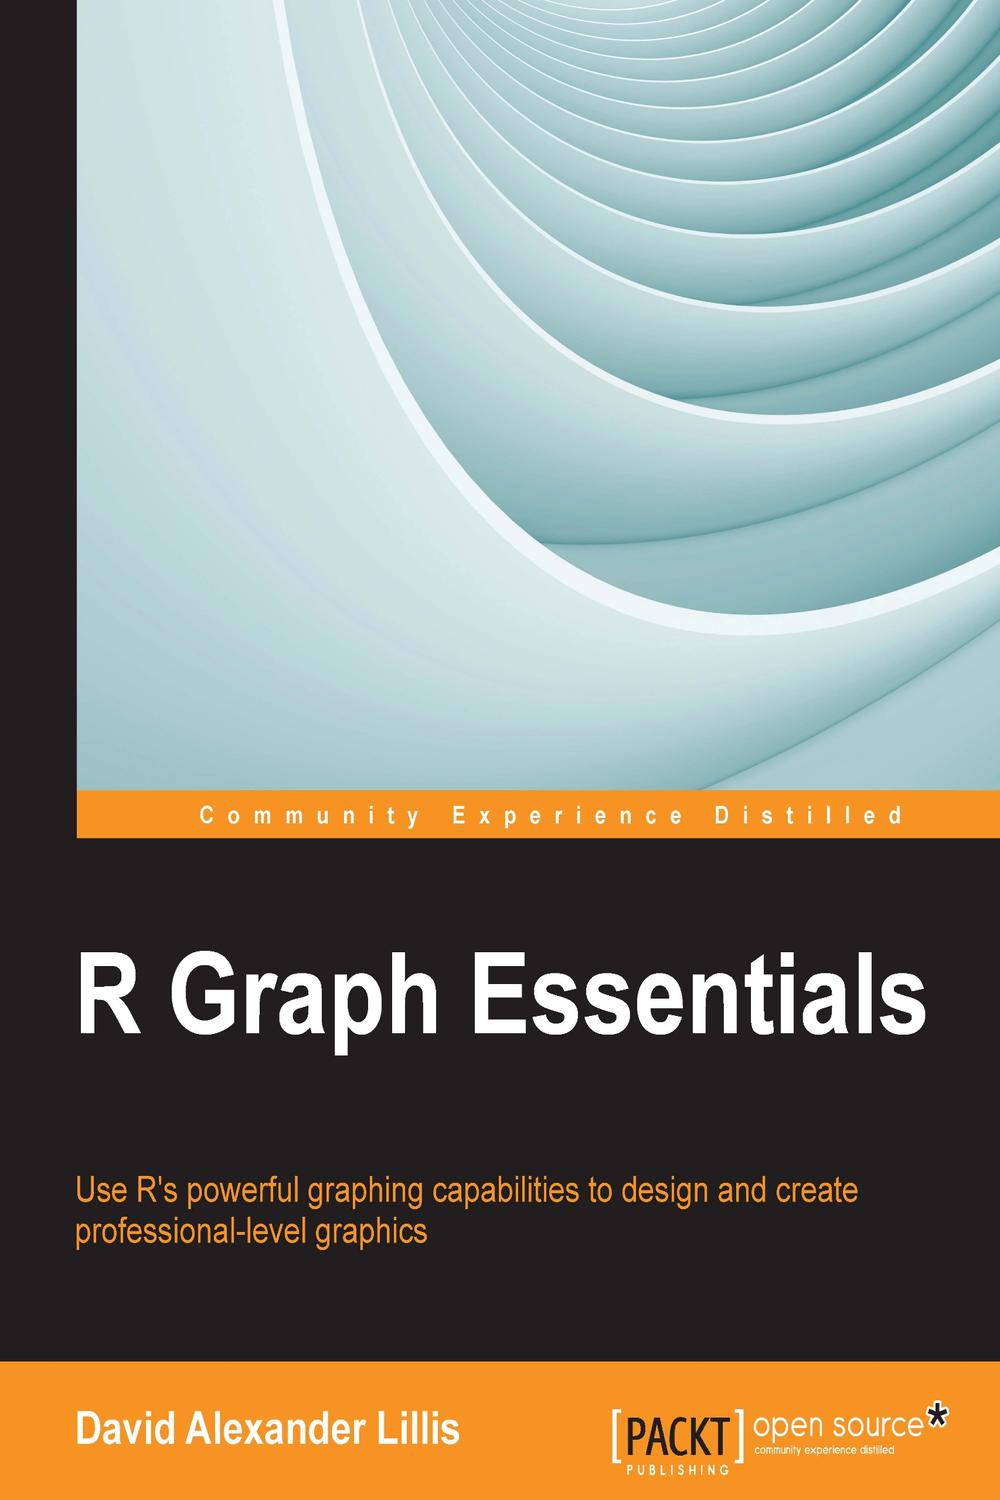 R Graph Essentials - David Alexander Lillis